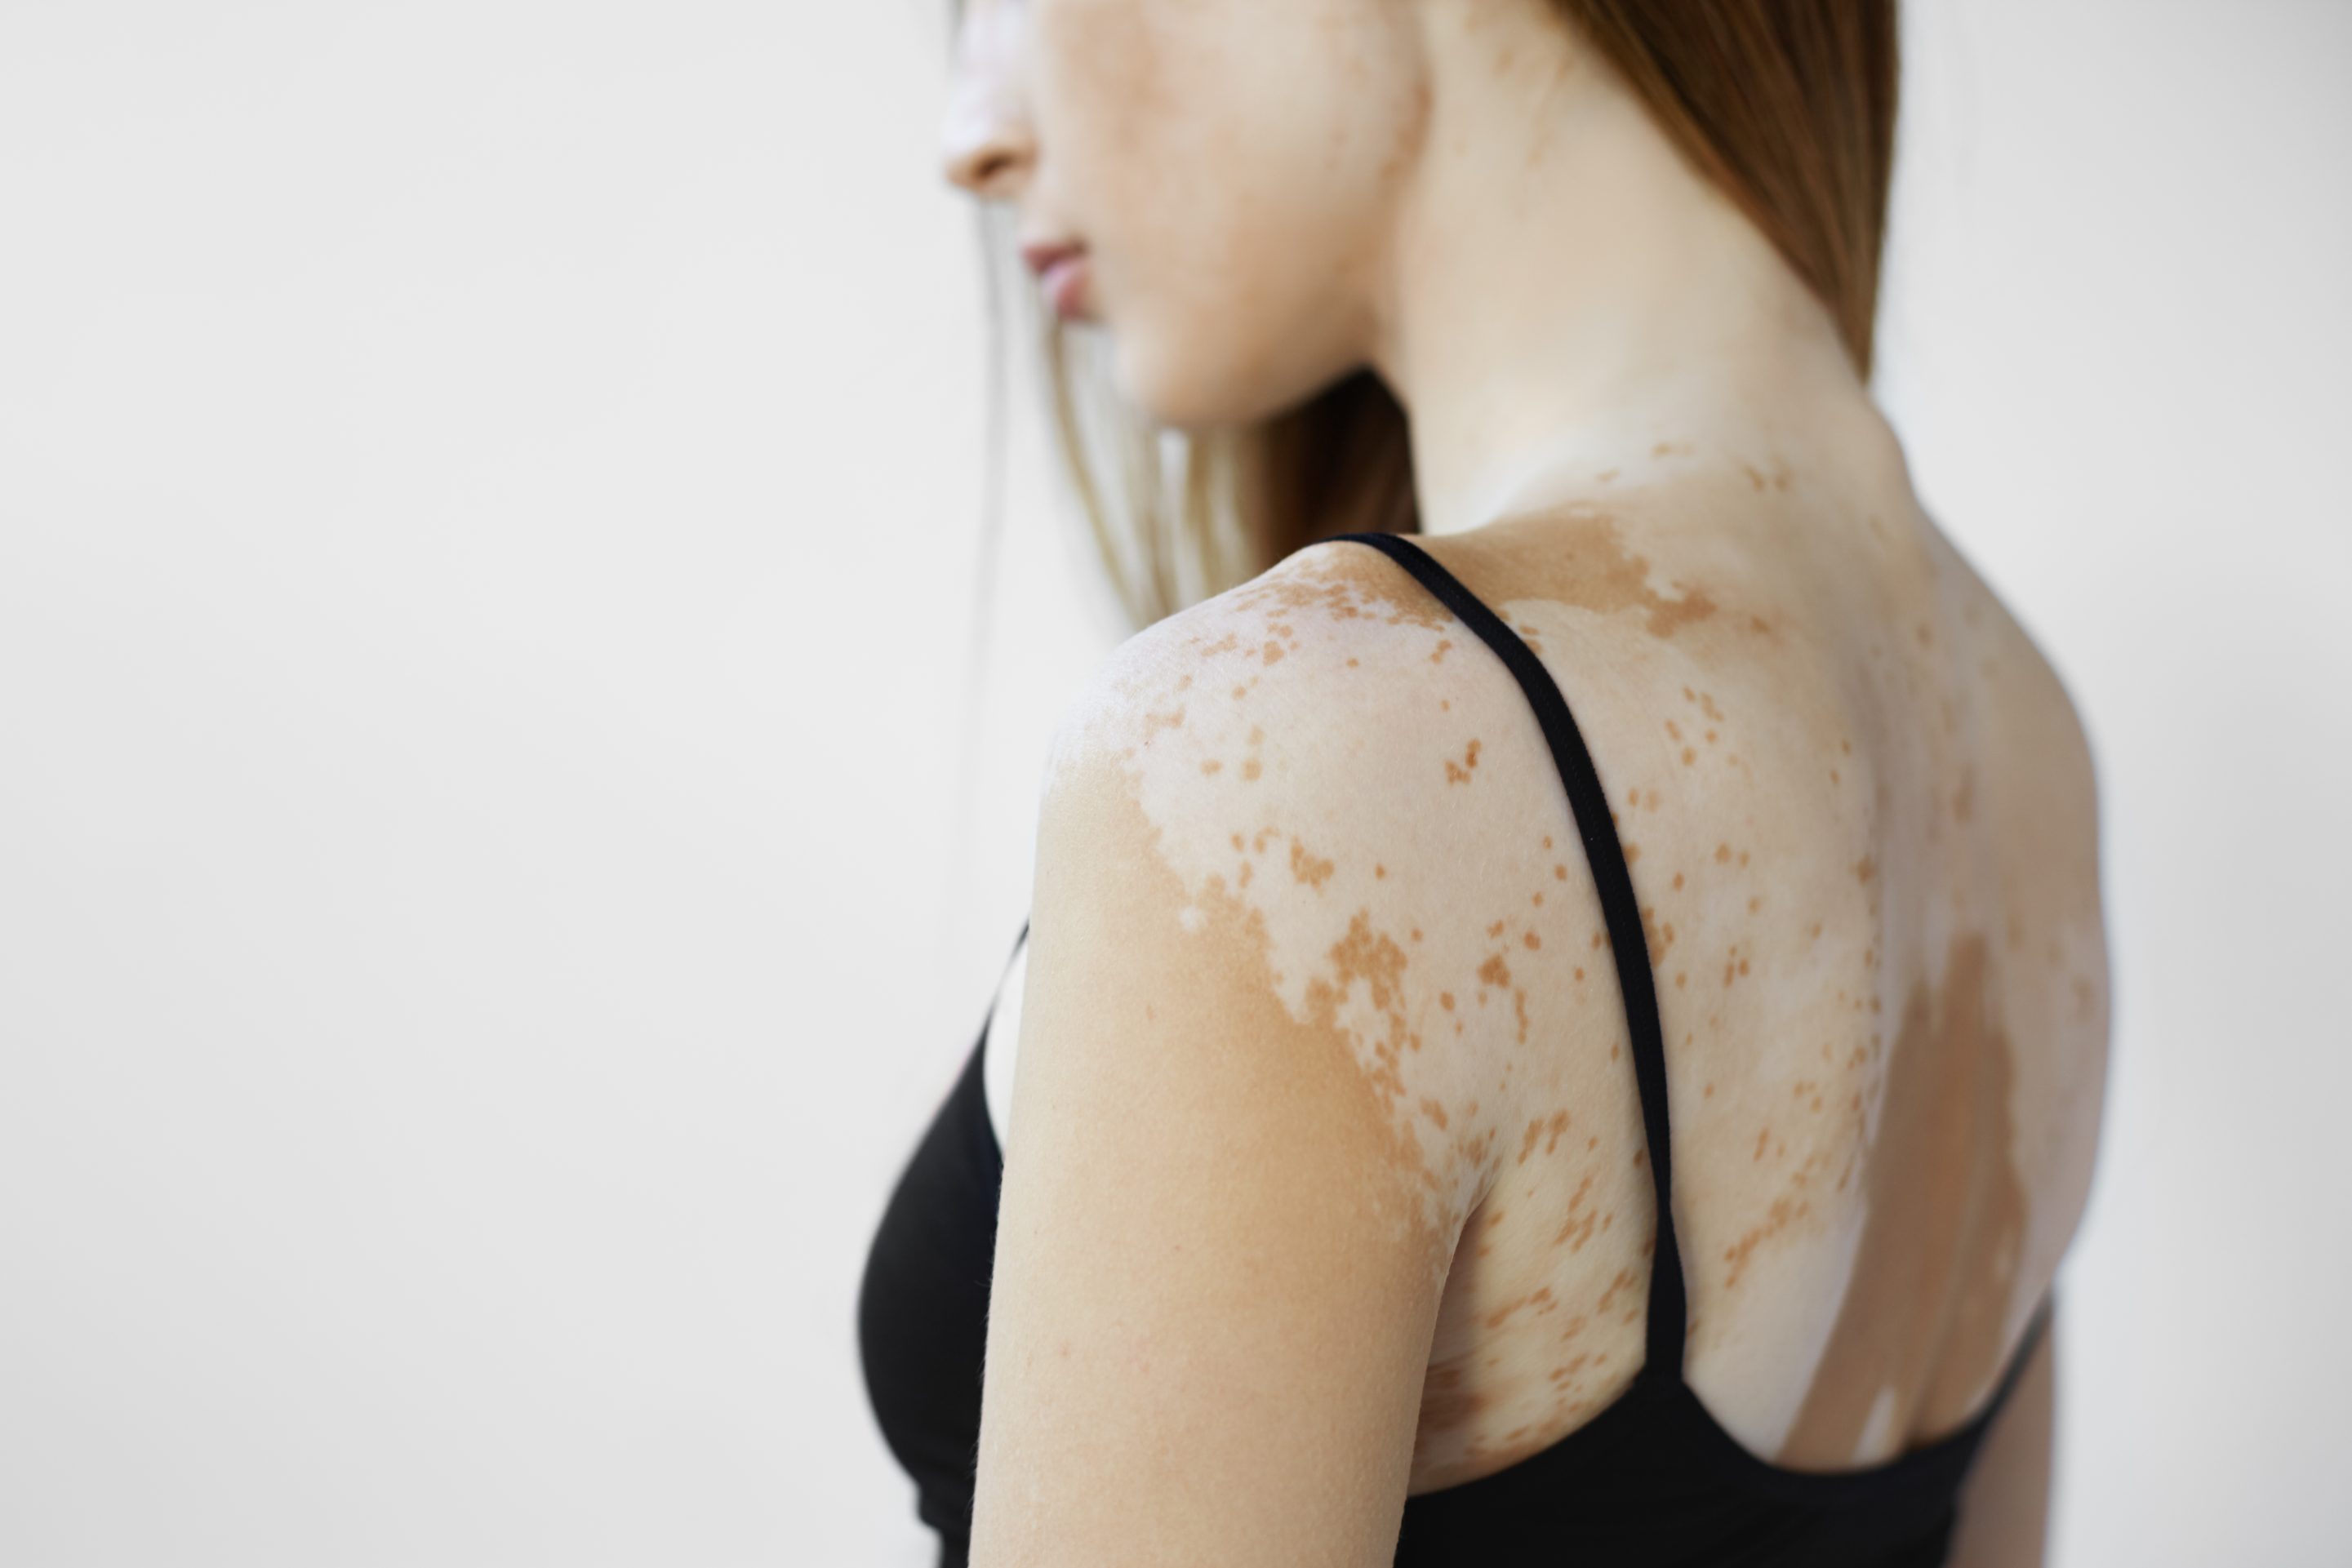 How to Prepare for the Vitiligo Treatment?